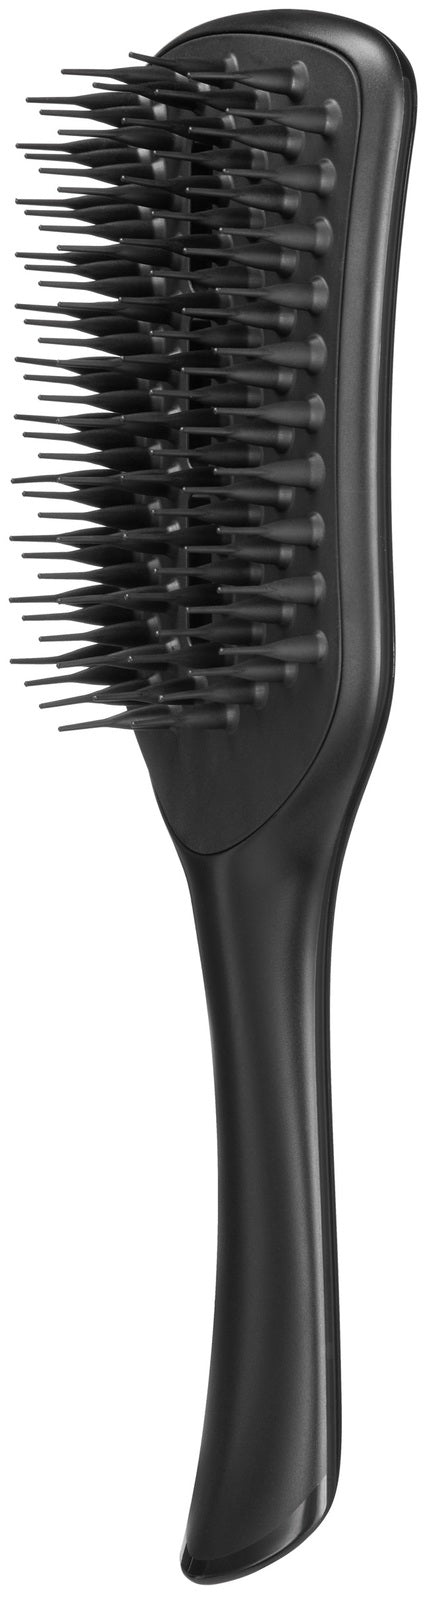 Tangle Teezer: Easy Dry and Go Vented Hair Brush - Jet Black